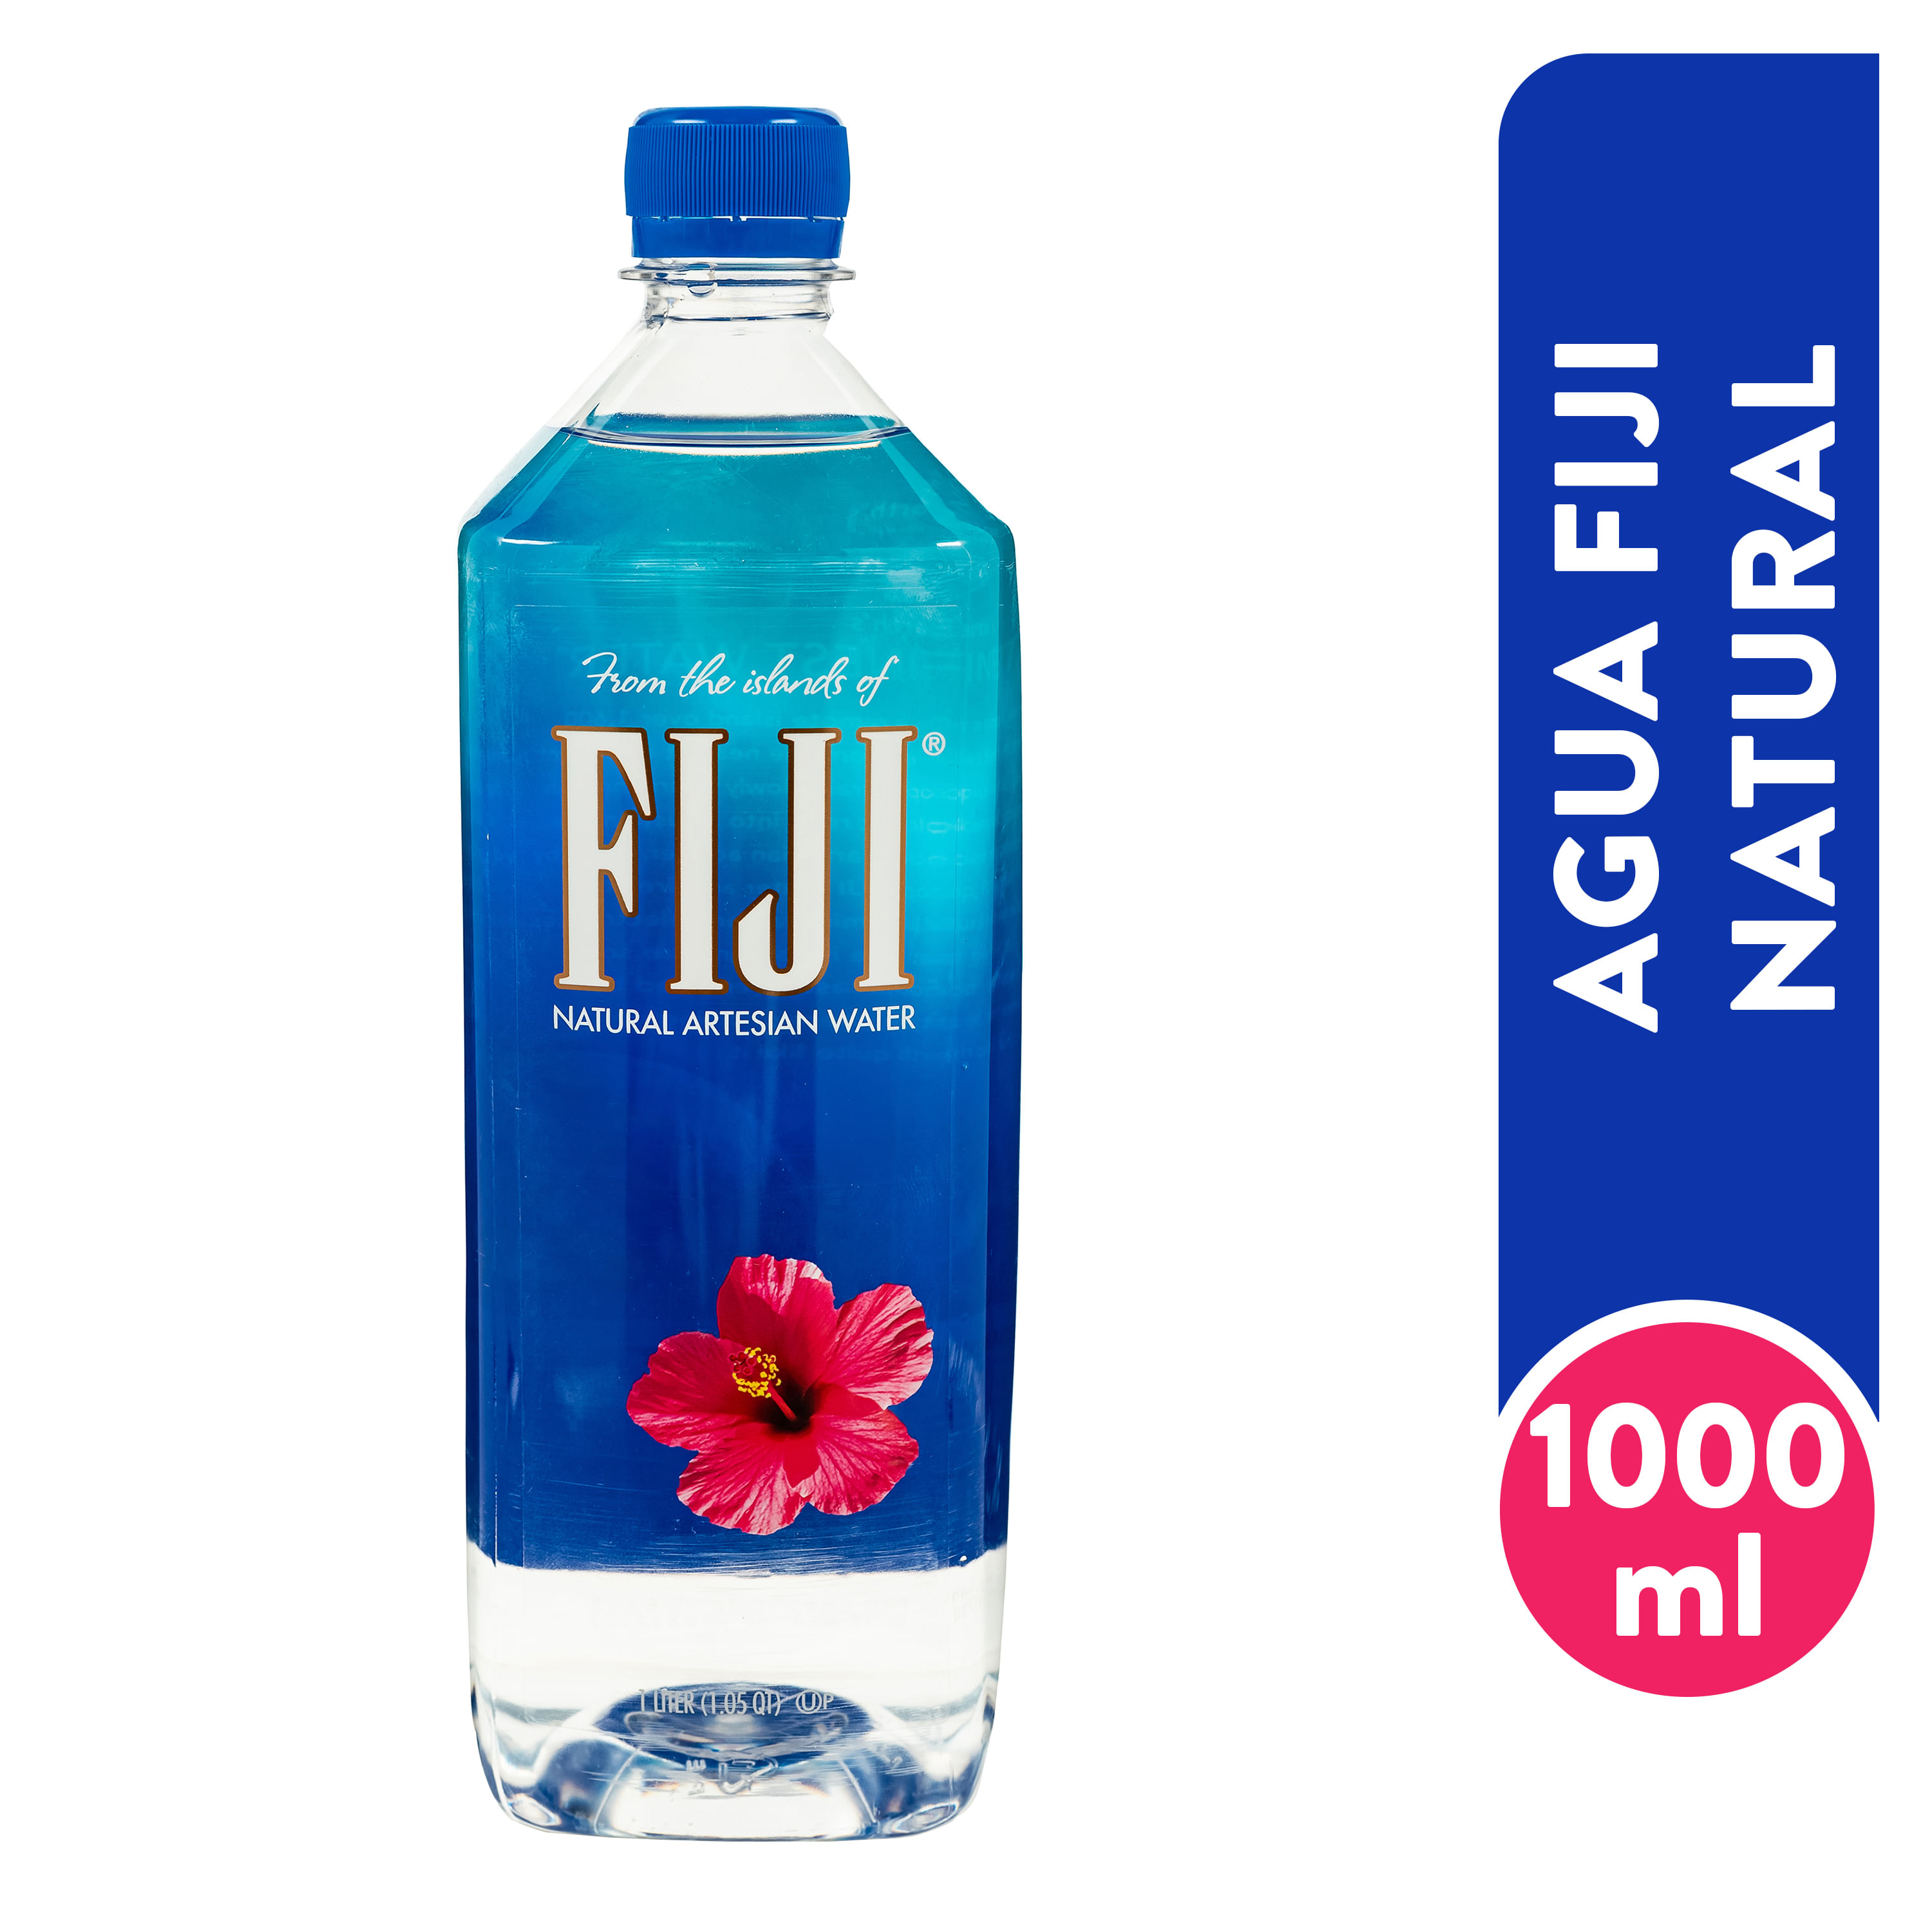 Comprar Agua Alpina Botella - 1000ml